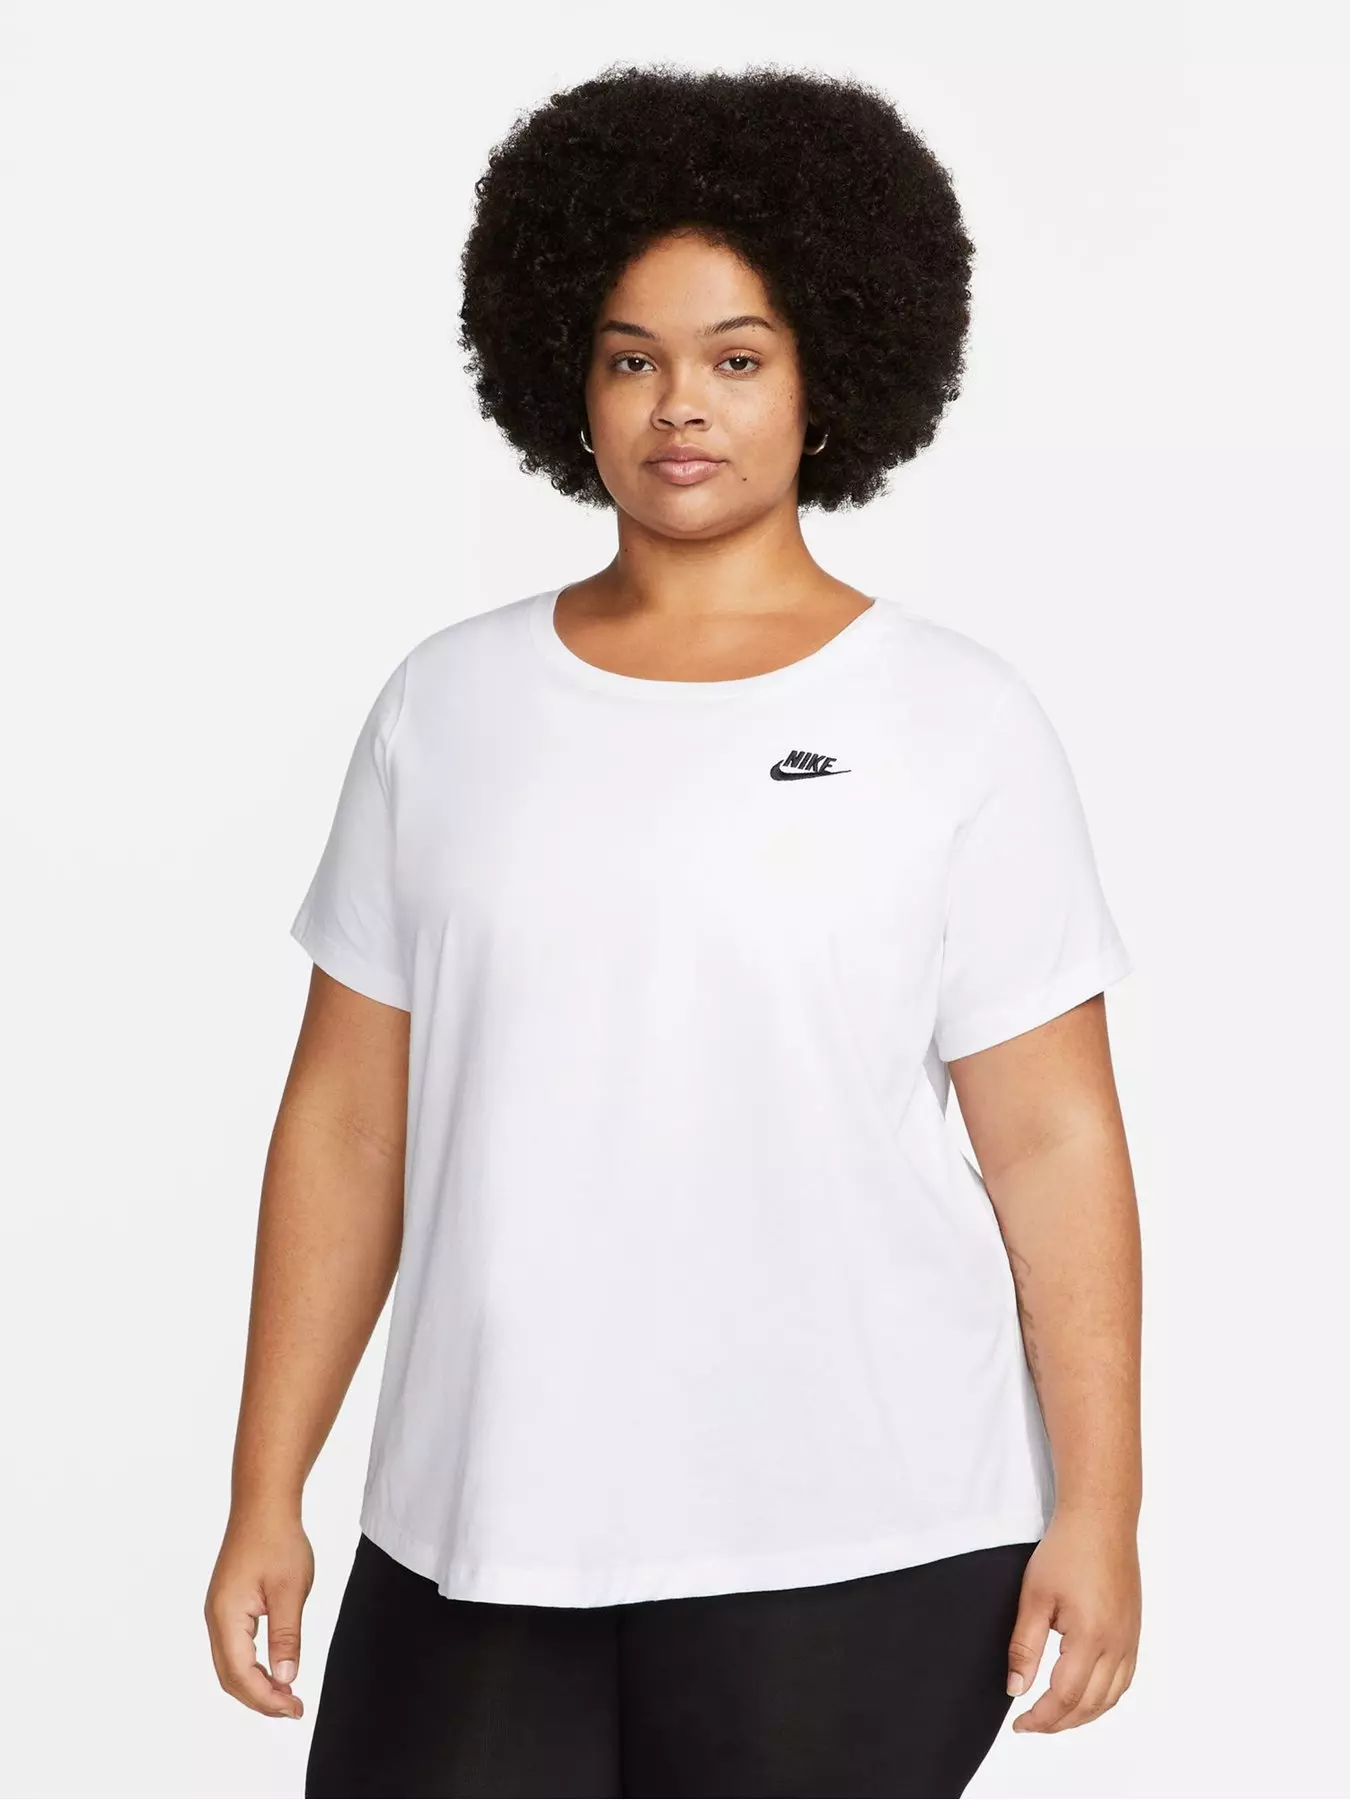 Nike Sportswear Club Essentials Women's T-Shirt BLACK